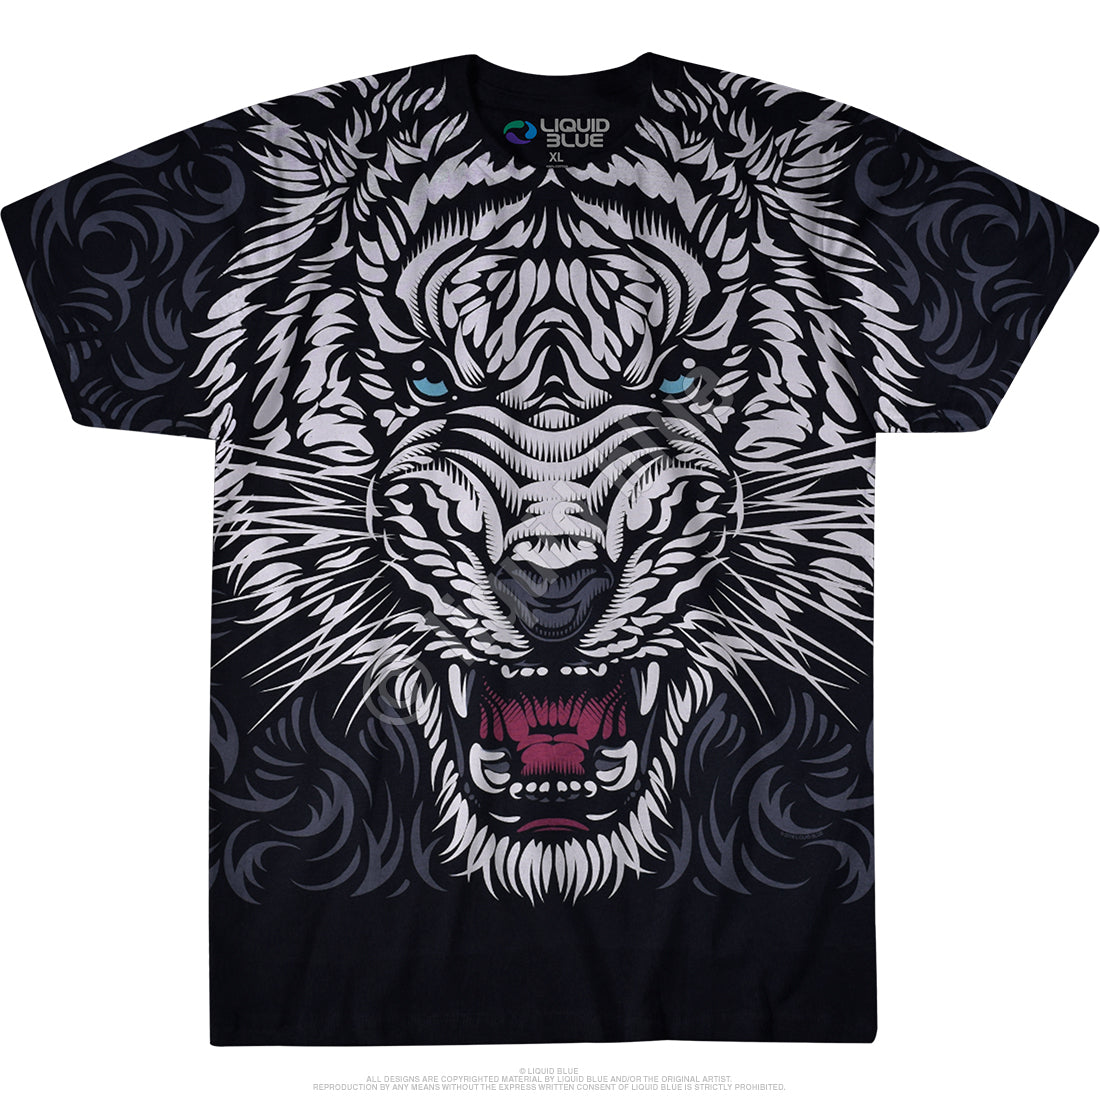 White Tiger Face Shirt